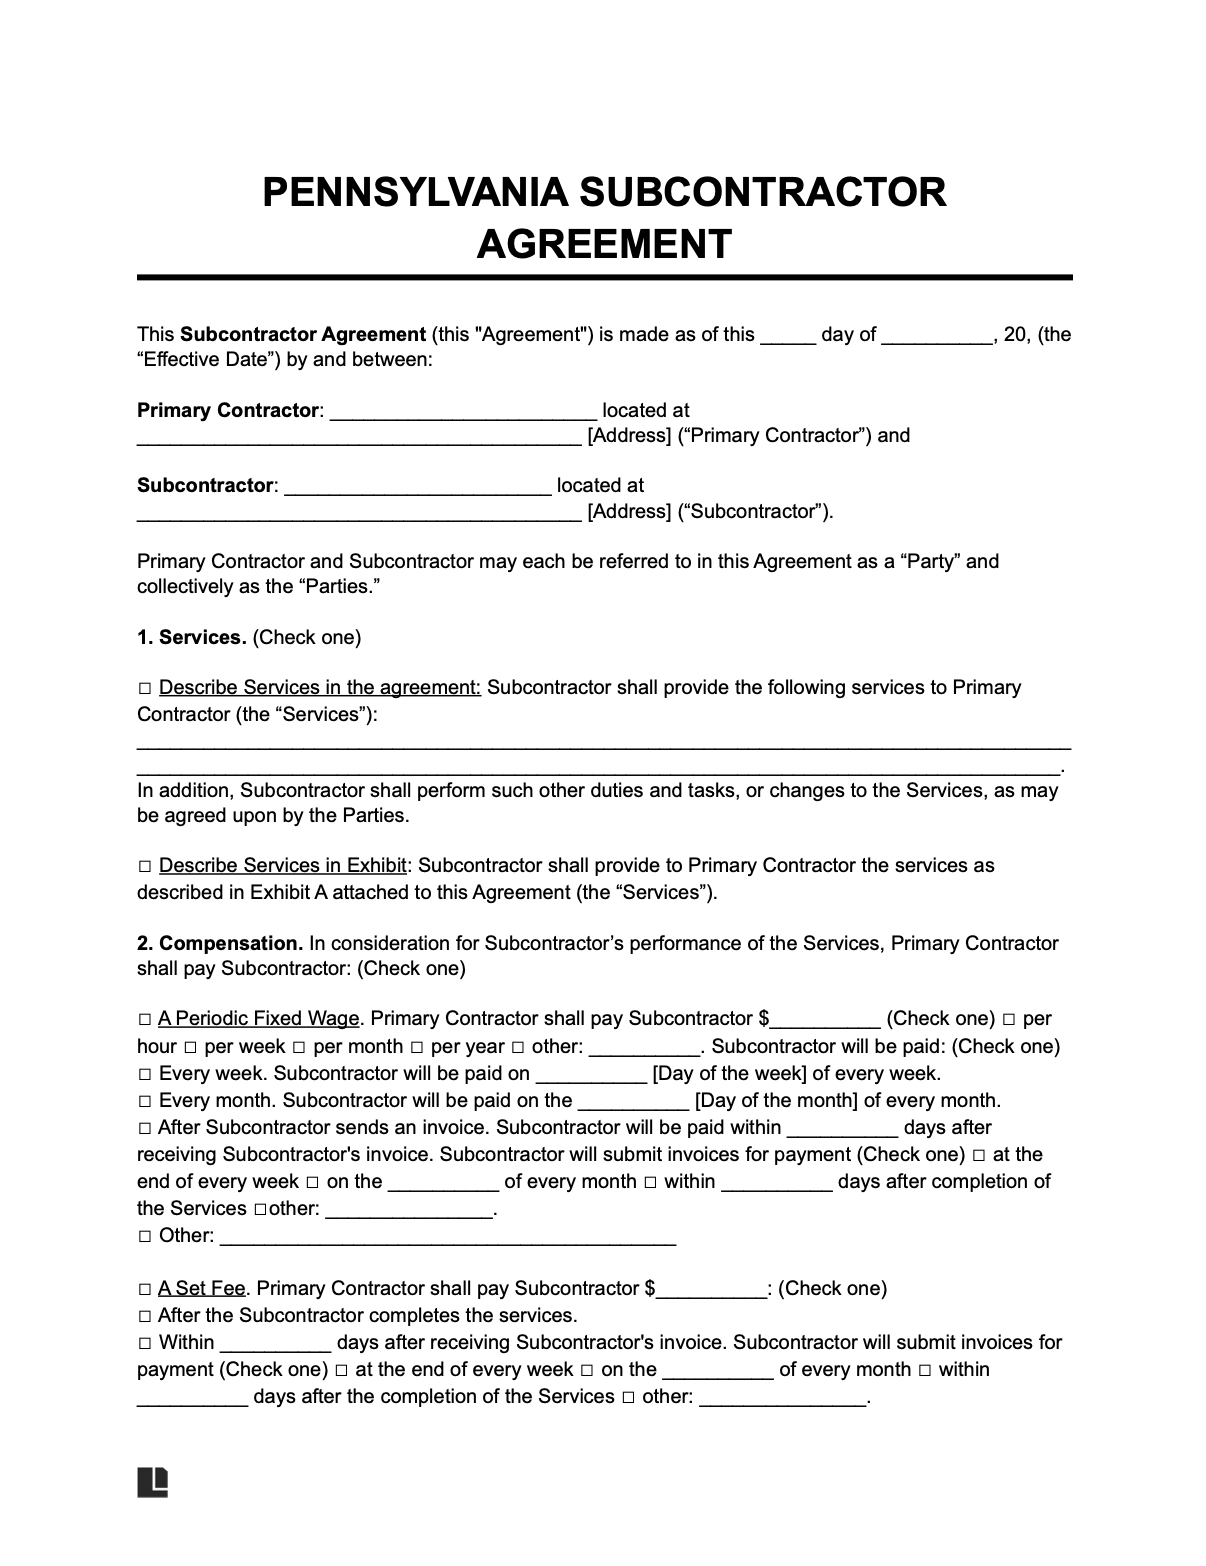 pennsylvania subcontractor agreement template